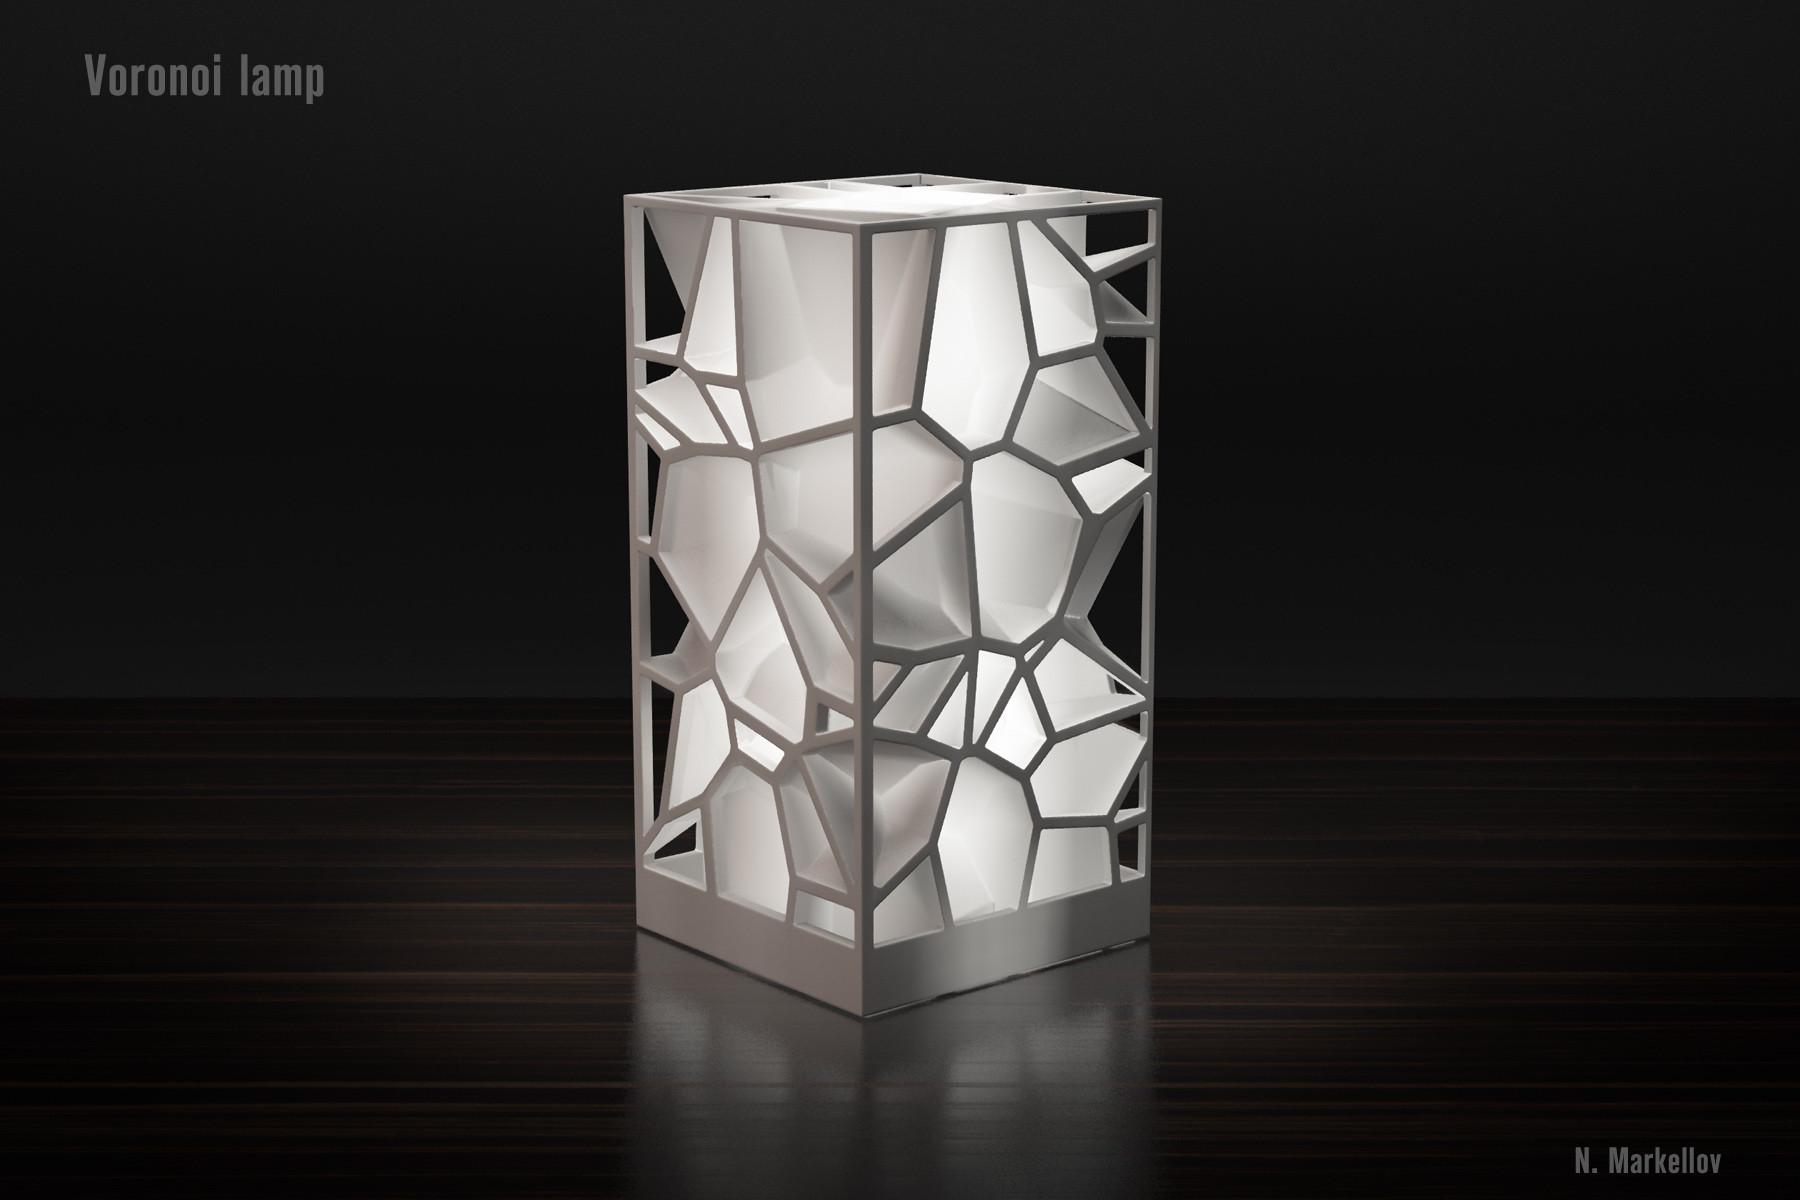 21 Best 9 Inch Cylinder Vase 2024 free download 9 inch cylinder vase of voronoi lamp by markellov thingiverse inside by markellov dec 9 2014 view original